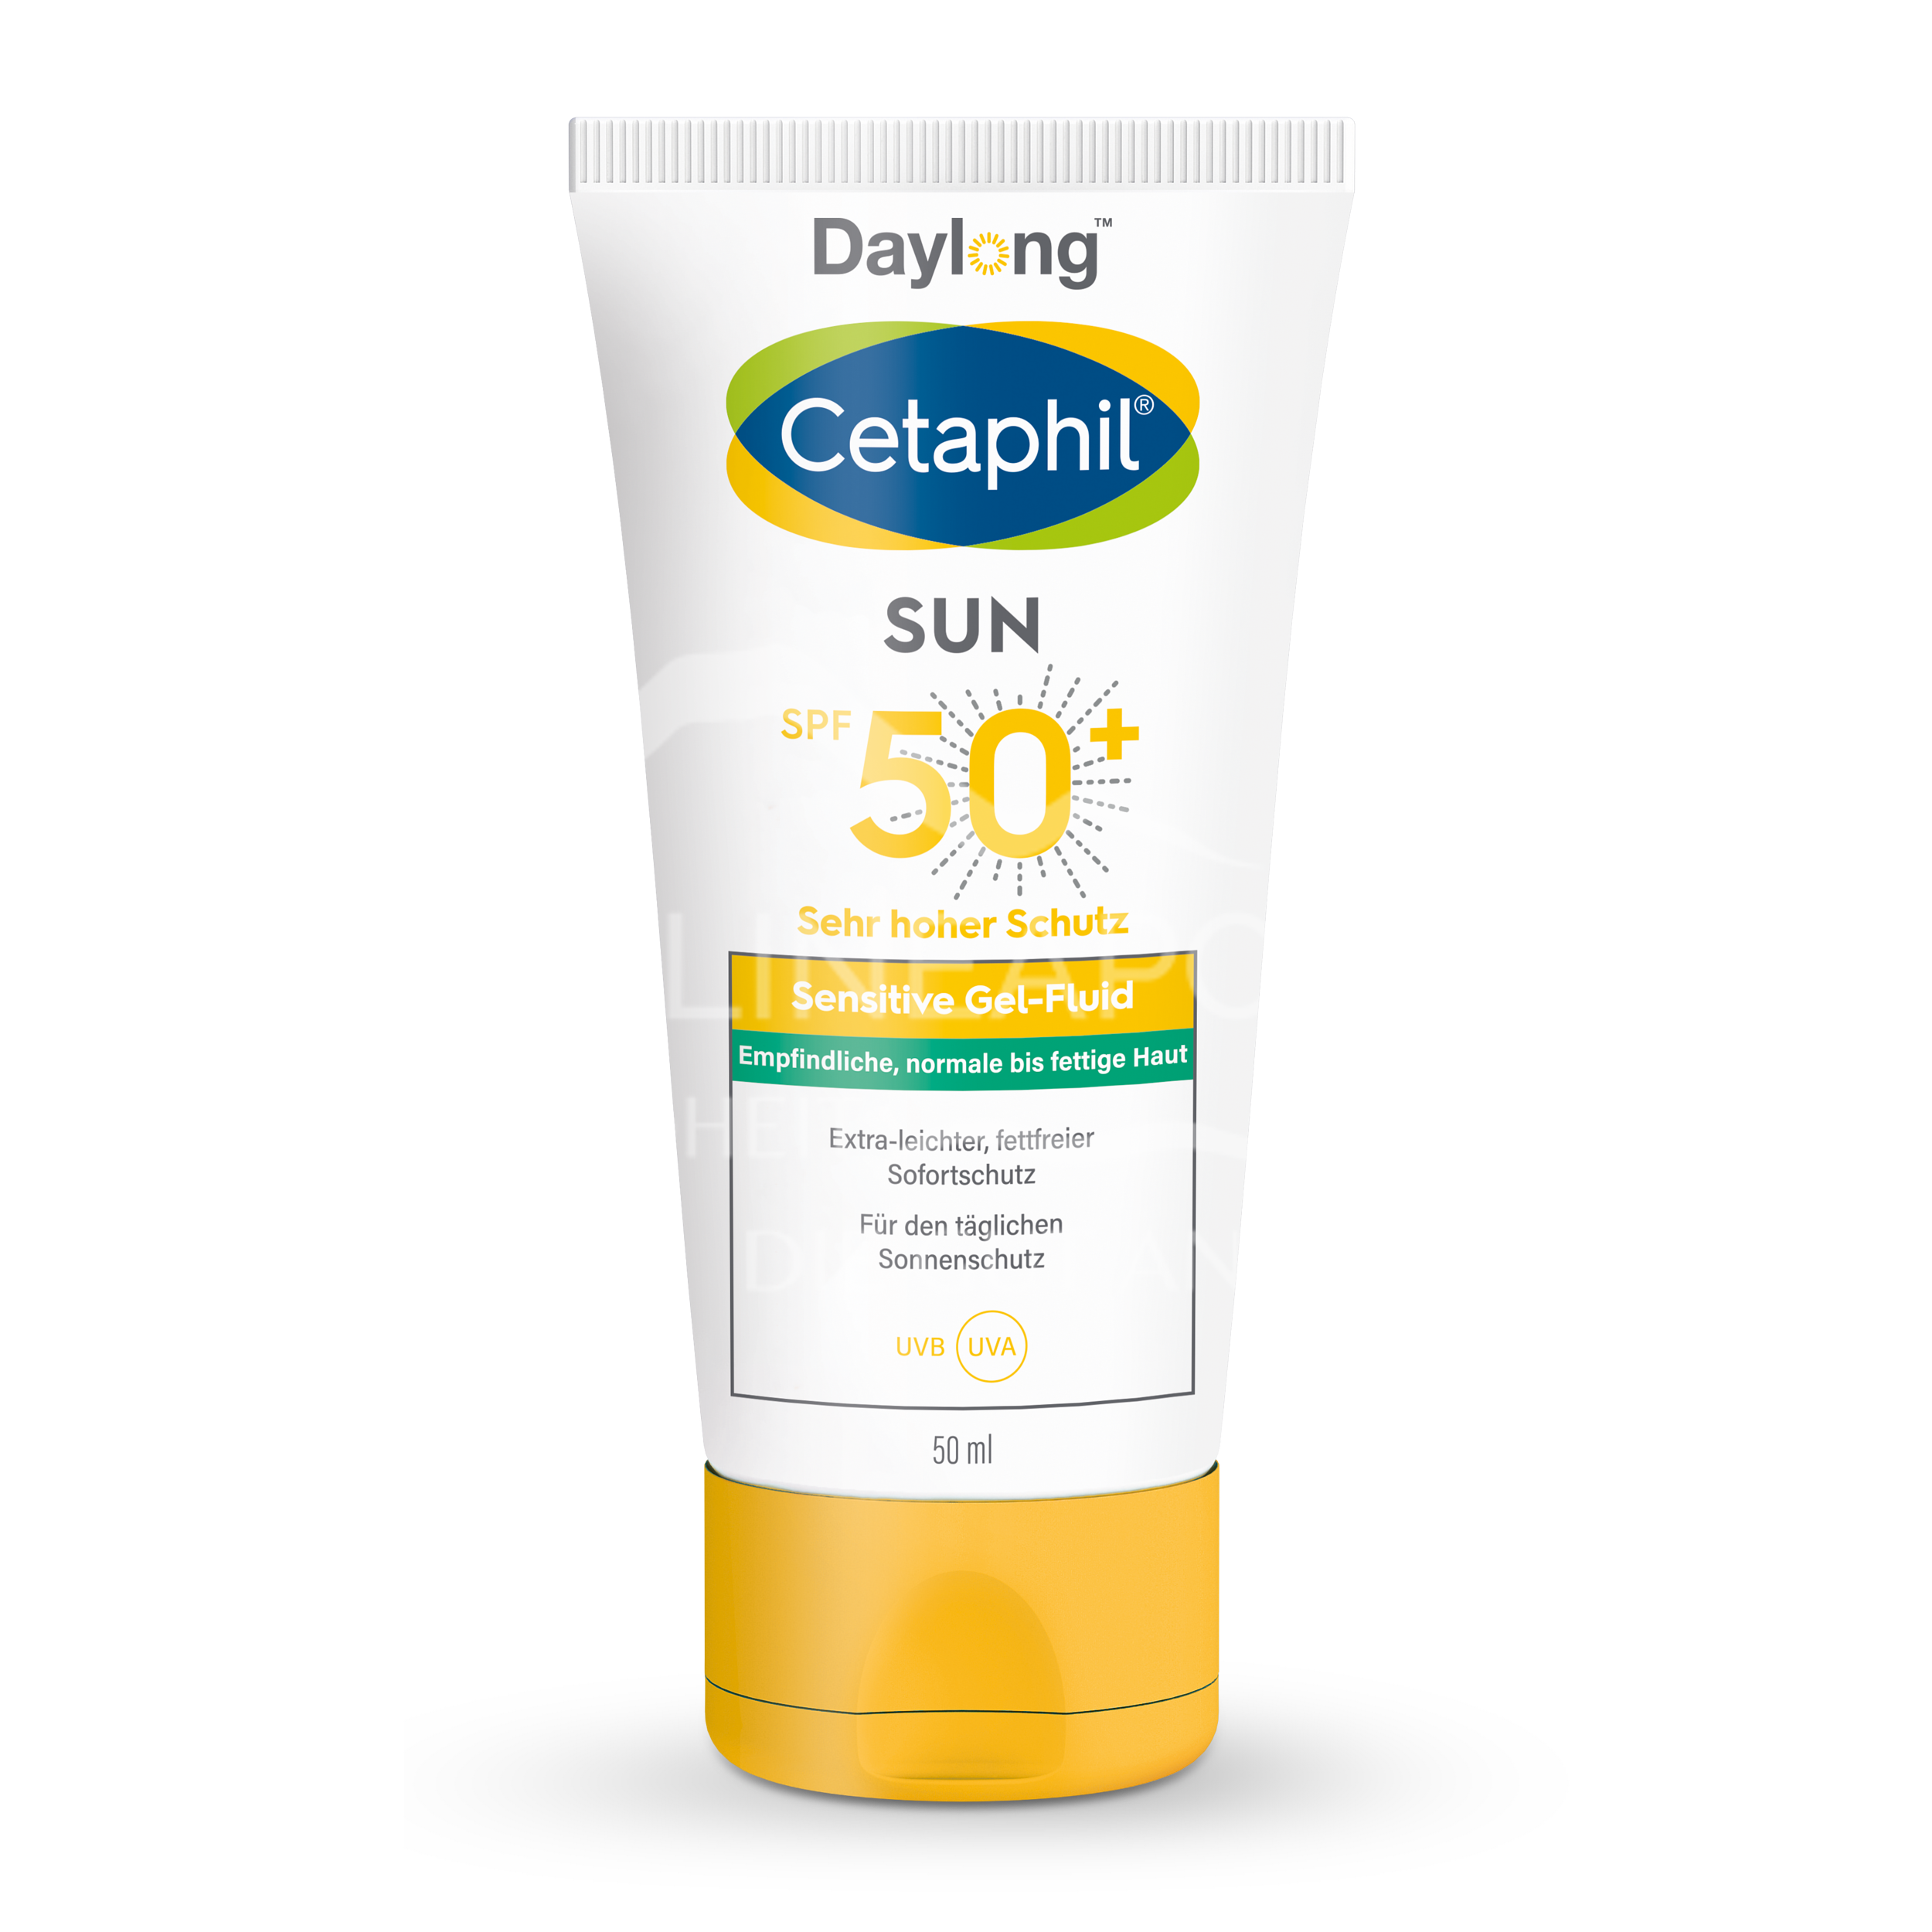 Cetaphil® Sun Daylong™ Sensitive Gel-Fluid Gesicht SPF 50+